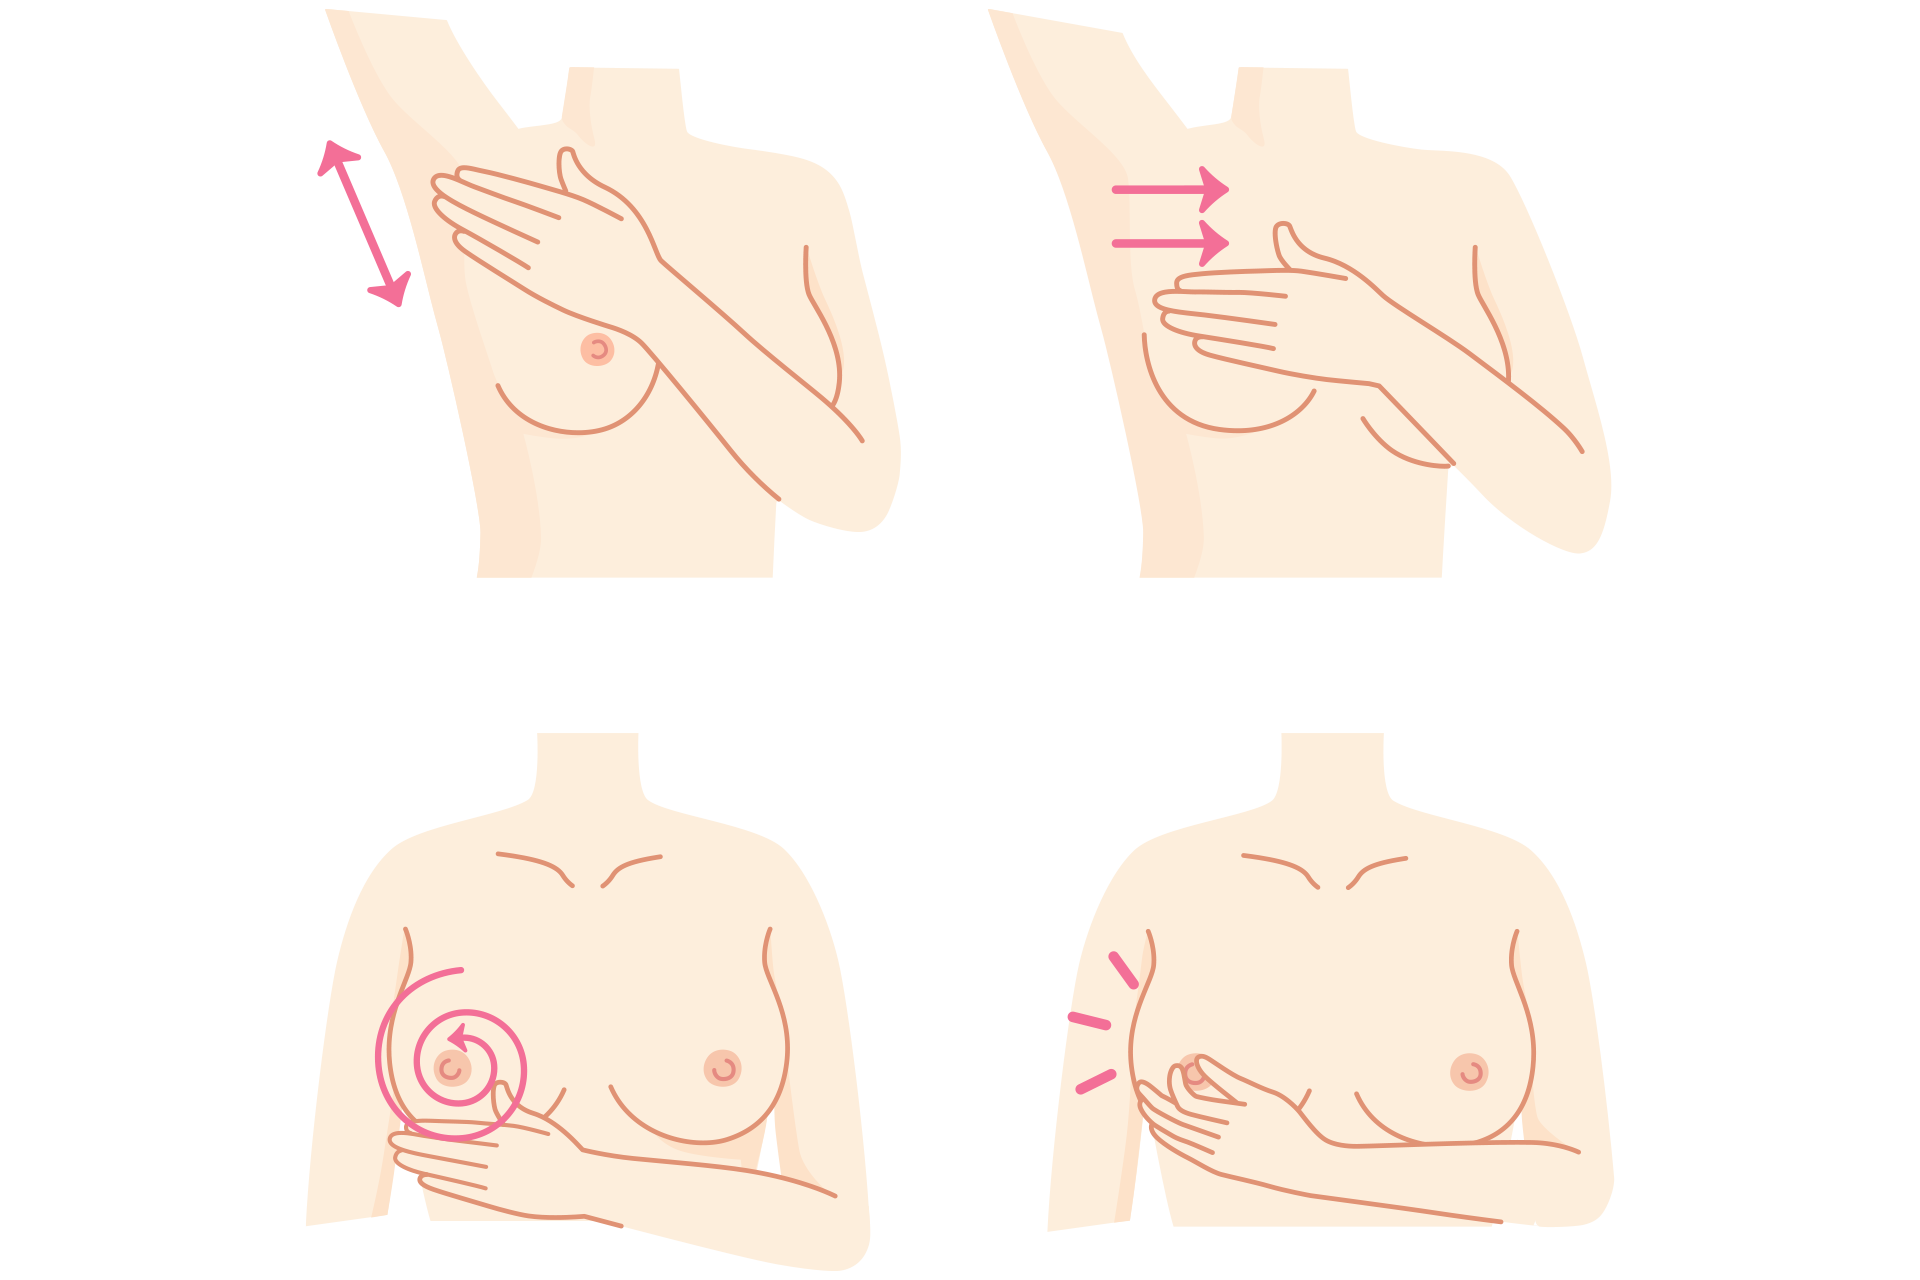 Breast cancer examination